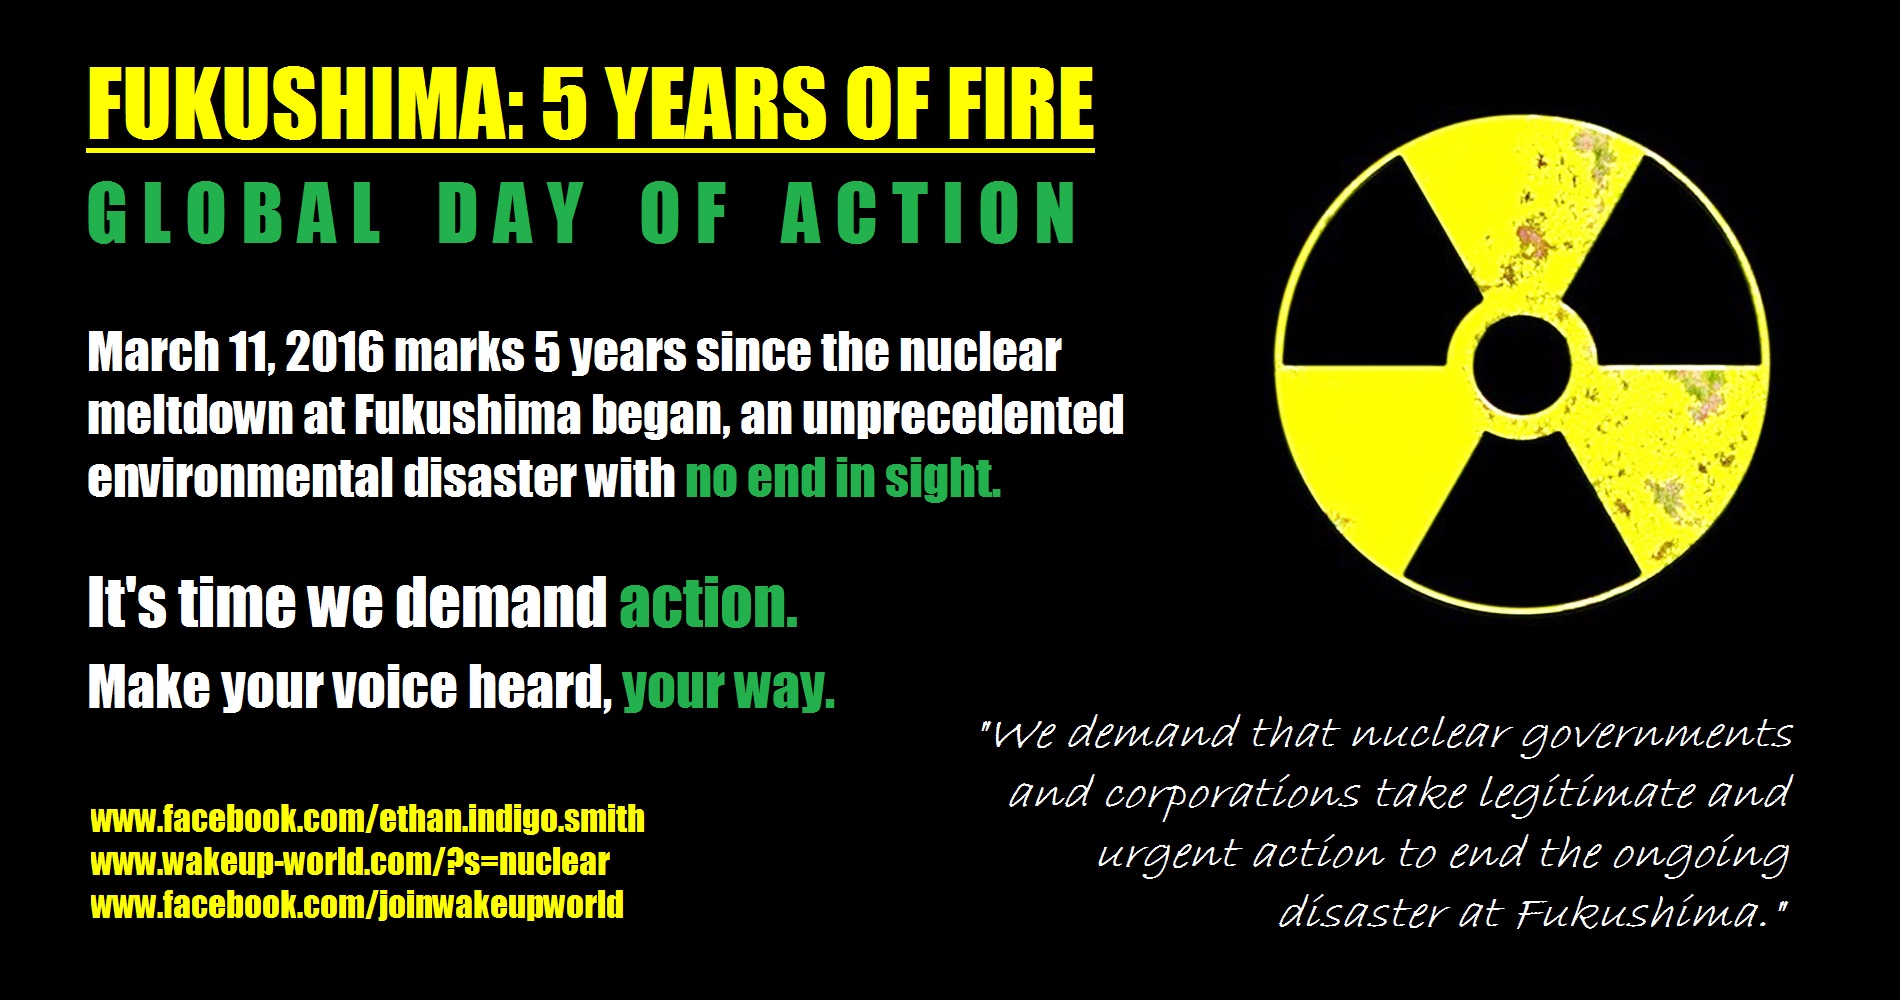 Fukushima - 5 Years of Fire